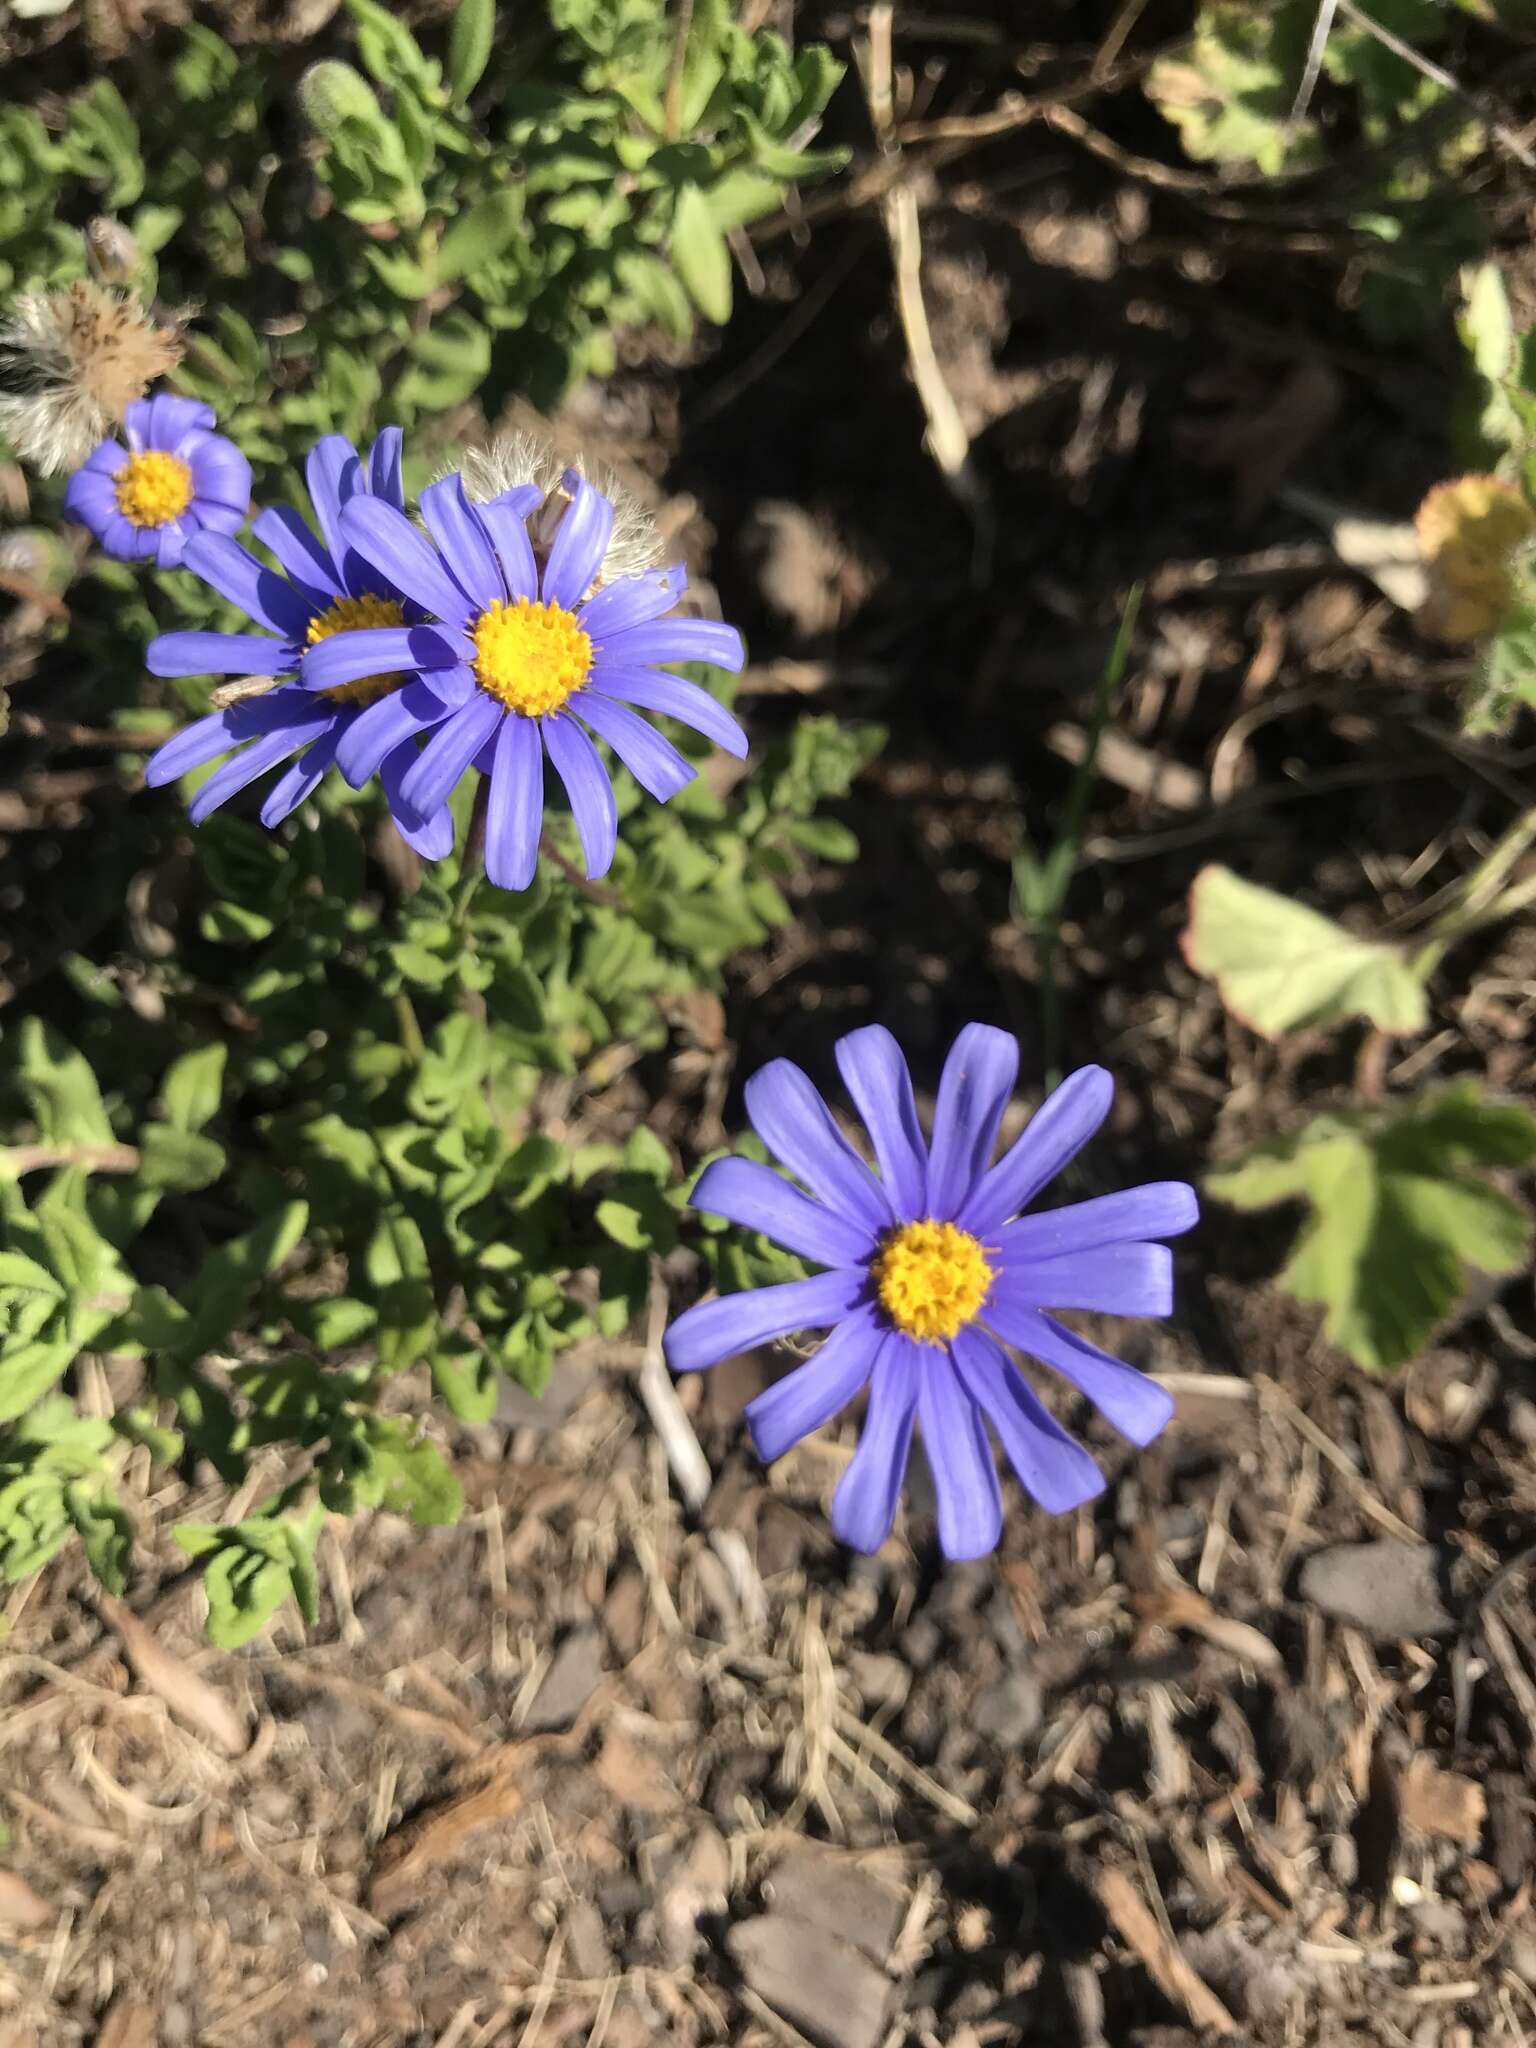 Image of blue daisy